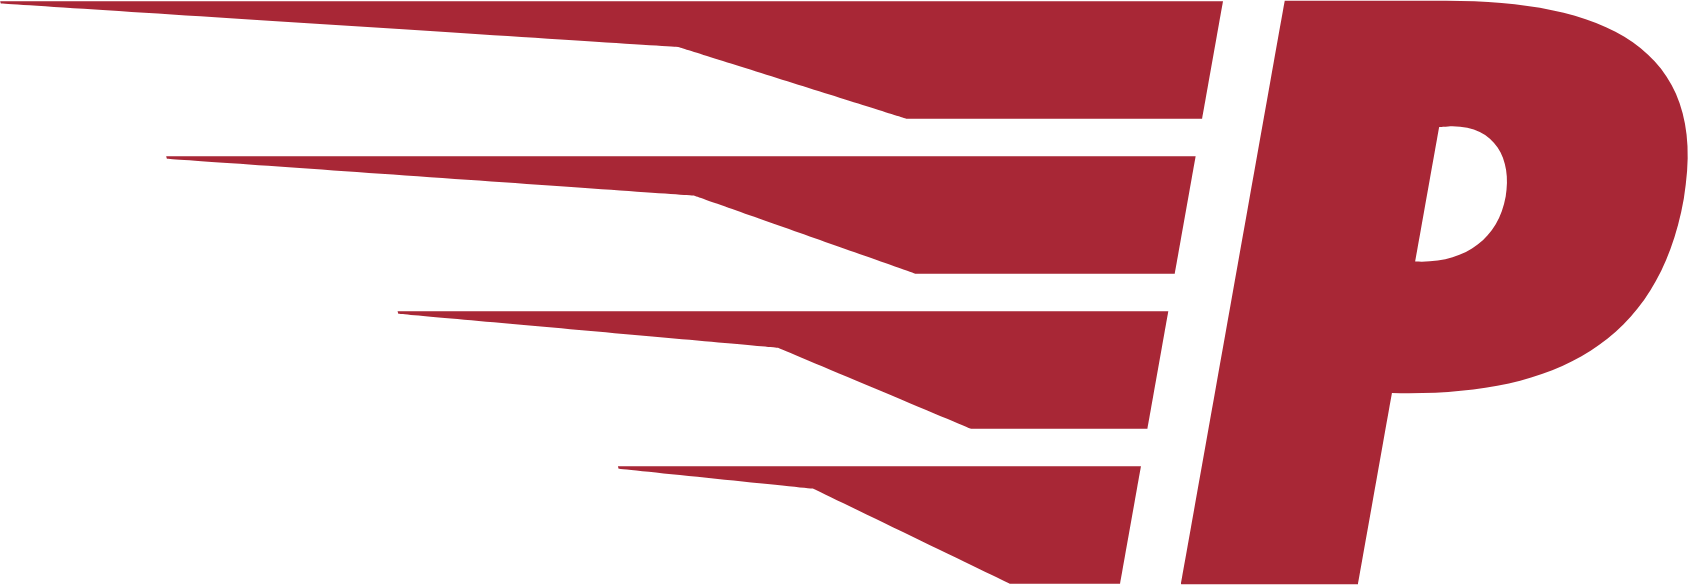 Performance Food Group logo (transparent PNG)